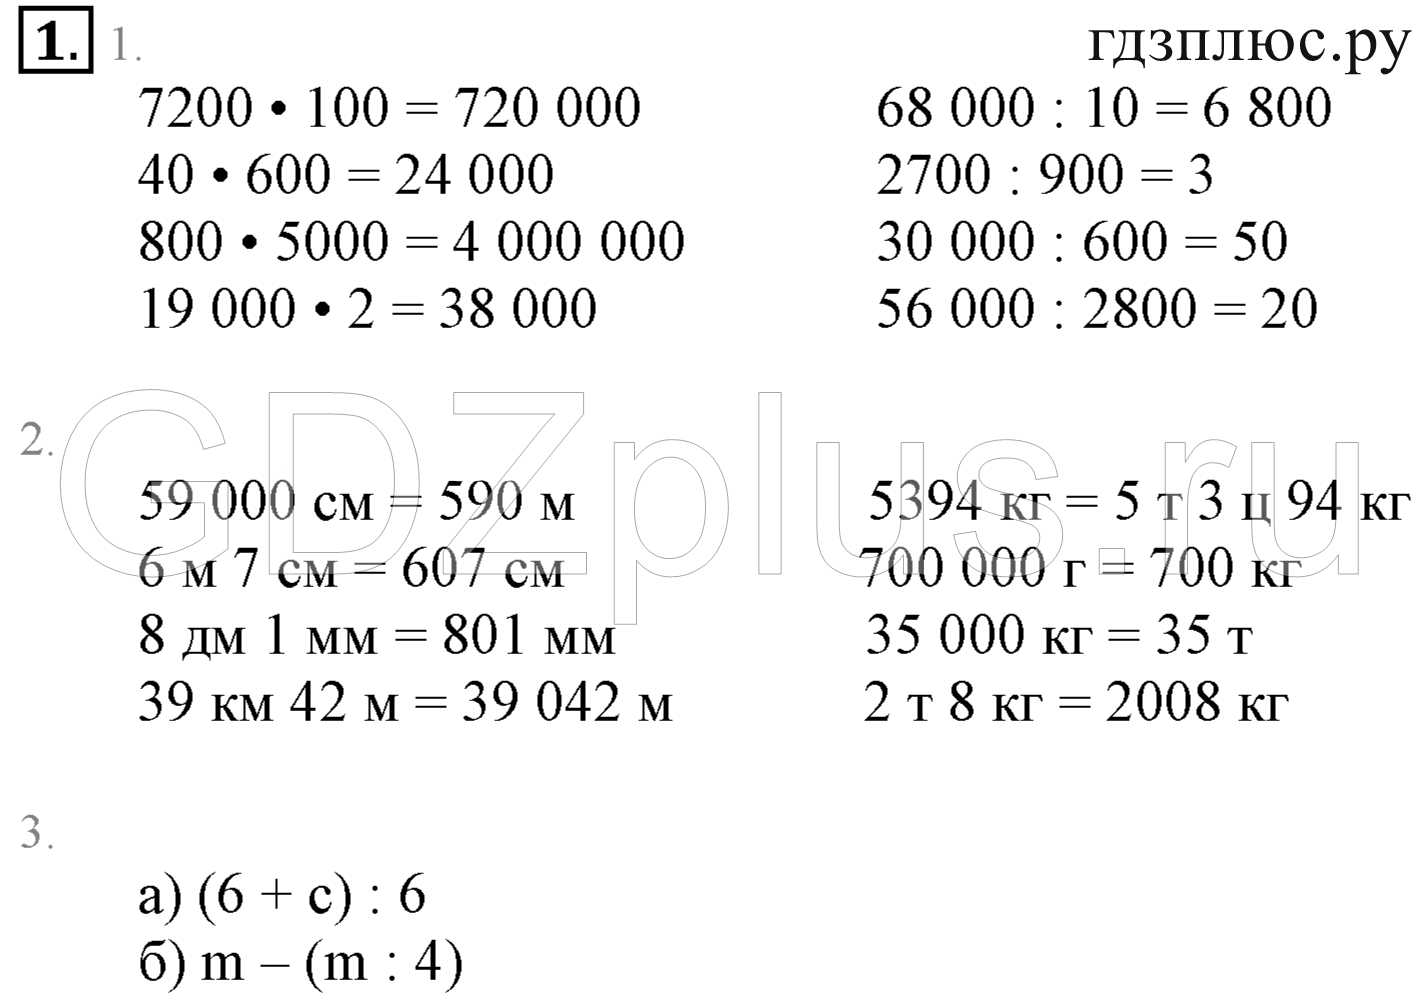 Урок 43 петерсон 3 класс. 600 7200 :(X 34)=520 4 класс. 7200 / X = 800 уравнения. 600-7200:(X+34)=520. Рабочая тетрадь з класса Петерсон страница 17.